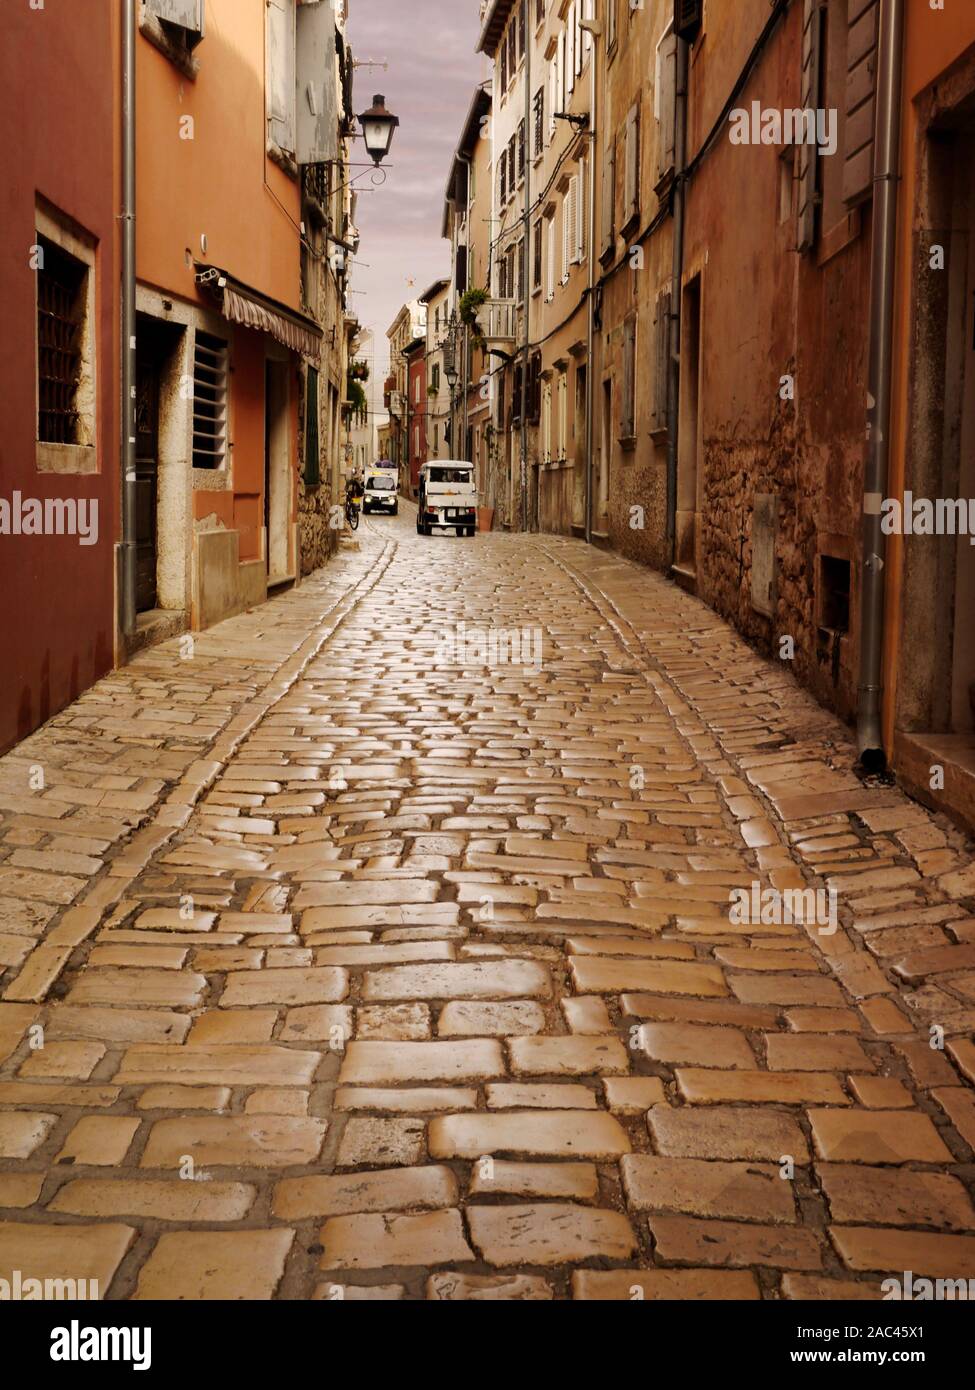 Old town narrow cobblestone street in Rovinj, Croatia on Istria Peninsula. Stock Photo